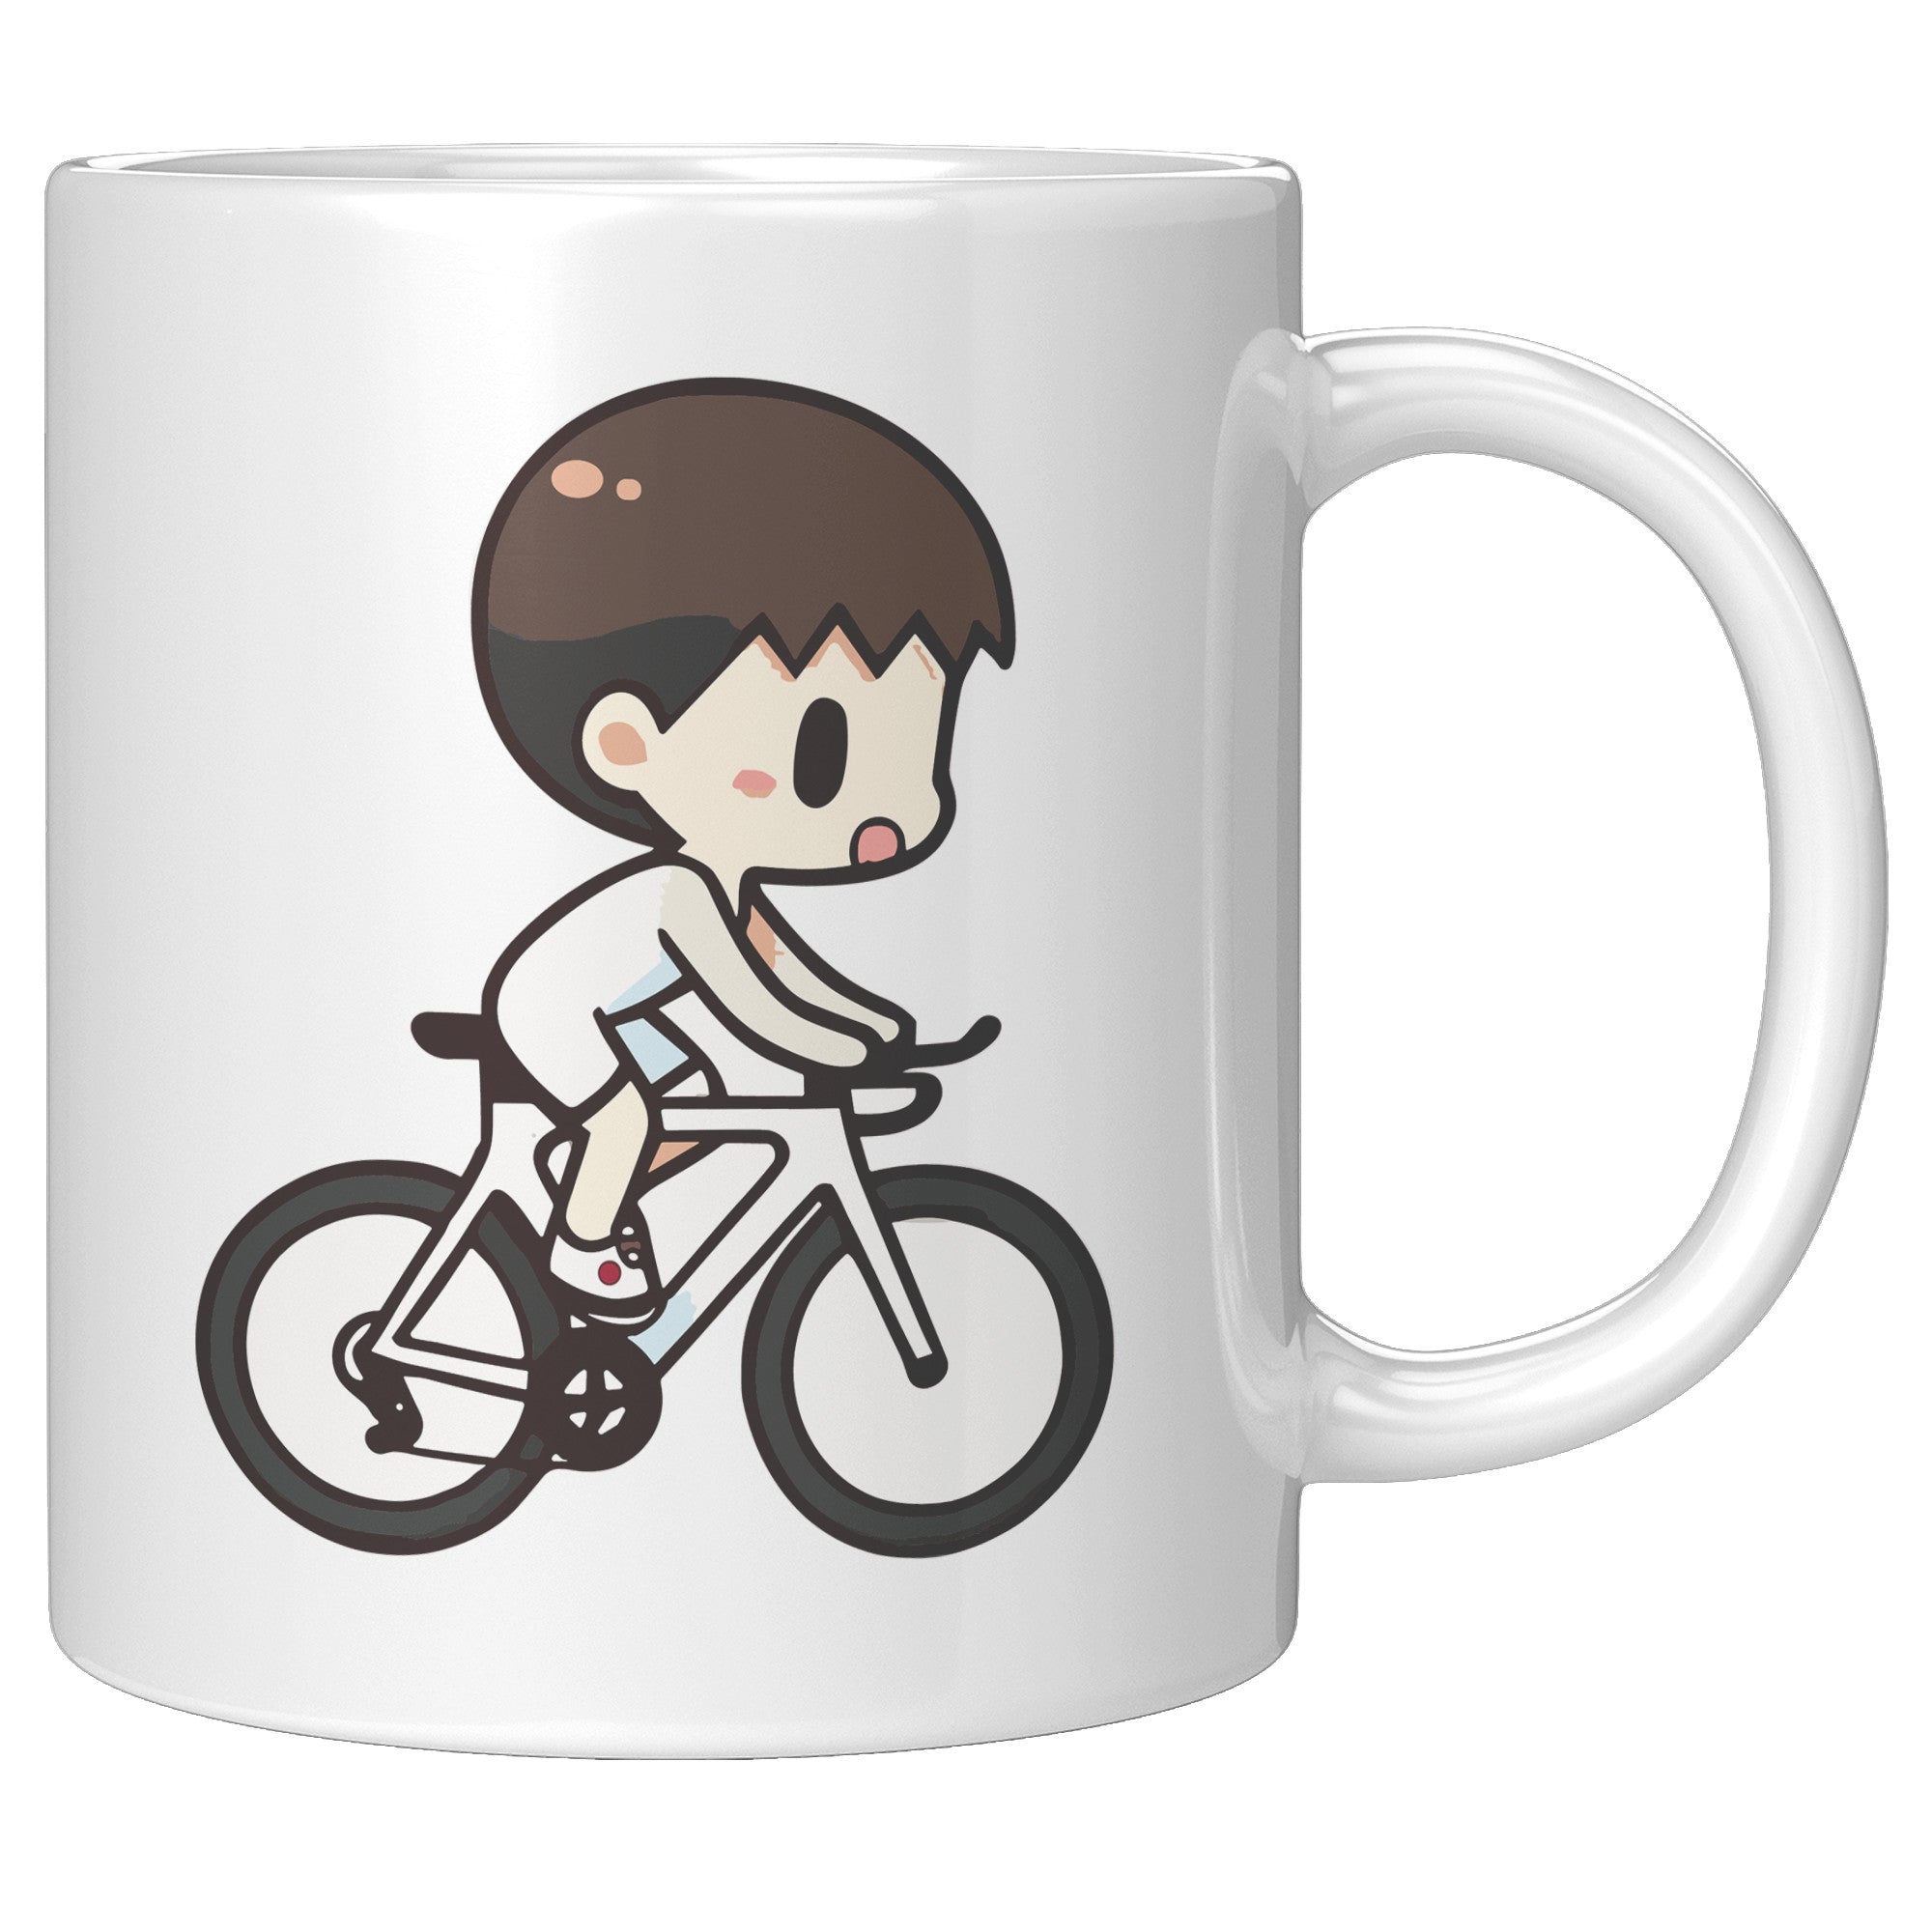 "Funko Pop Triathlon Athlete Coffee Mug - Multisport Morning Brew Cup - Ideal Gift for Triathletes - Swim, Bike, Run Inspired Mug" - C